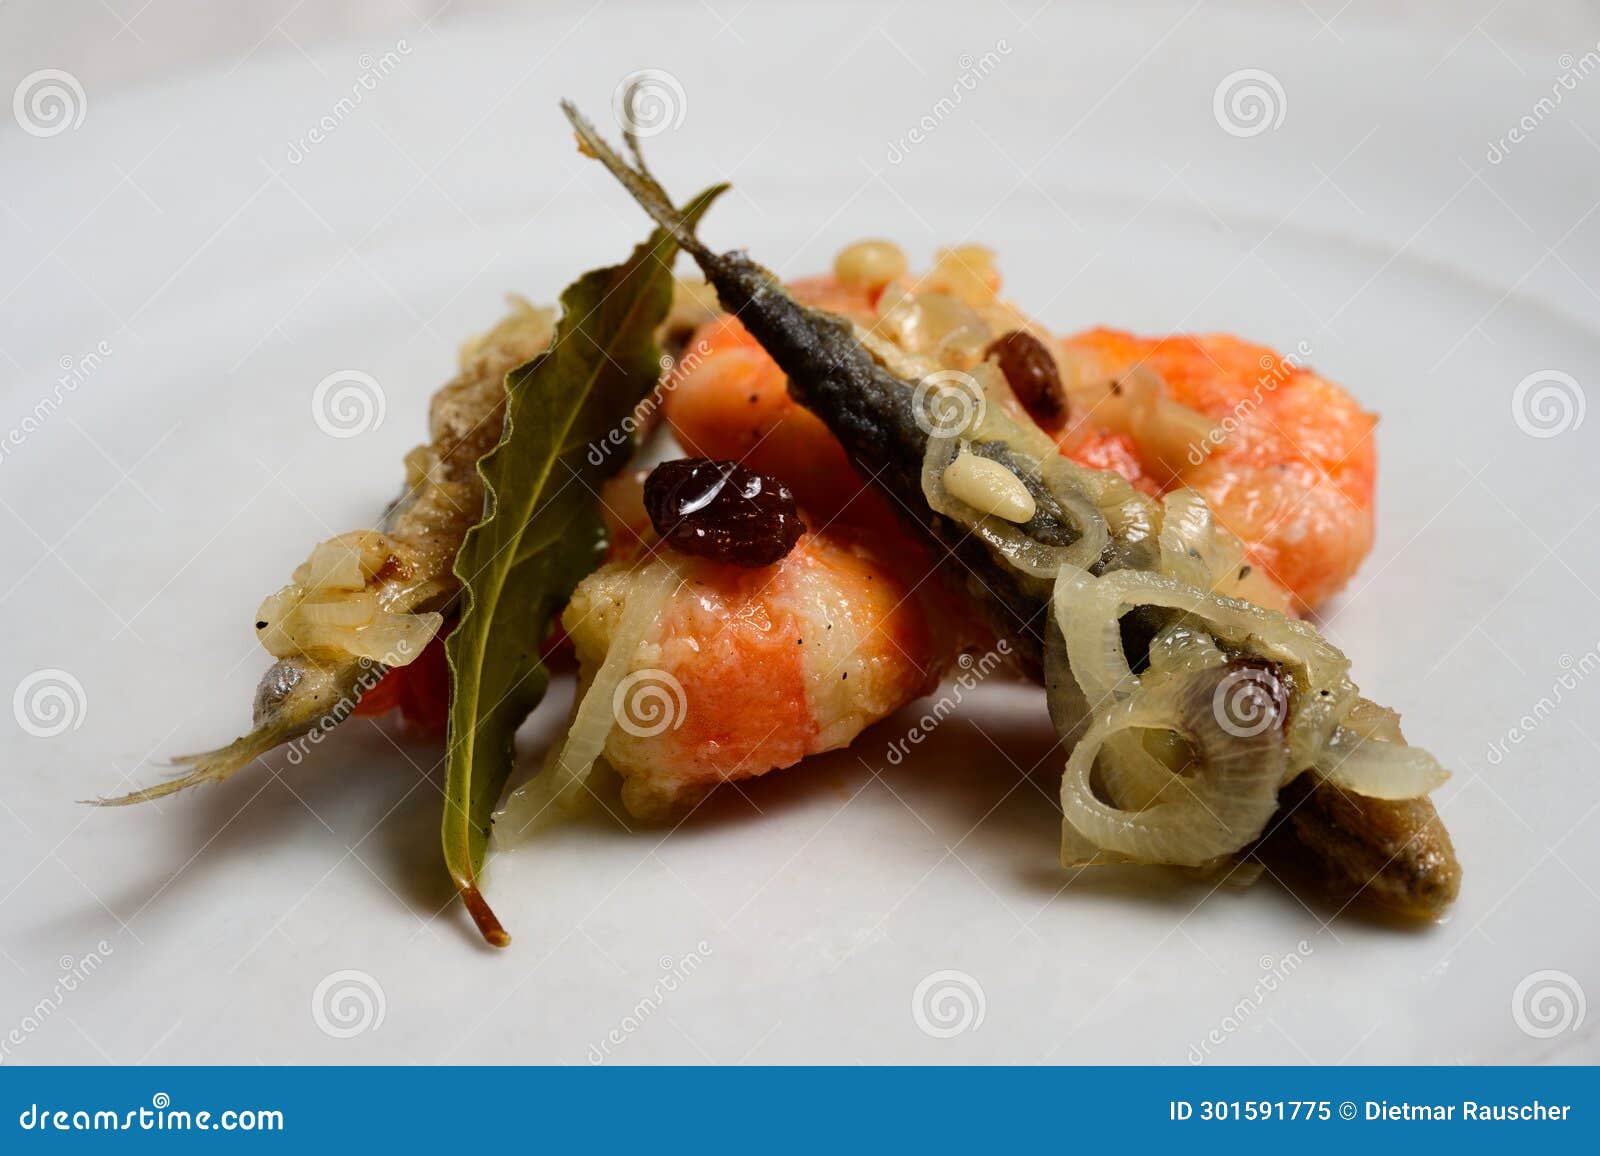 sarde e gamberi in saor, venetian marinated shrimps and sardines